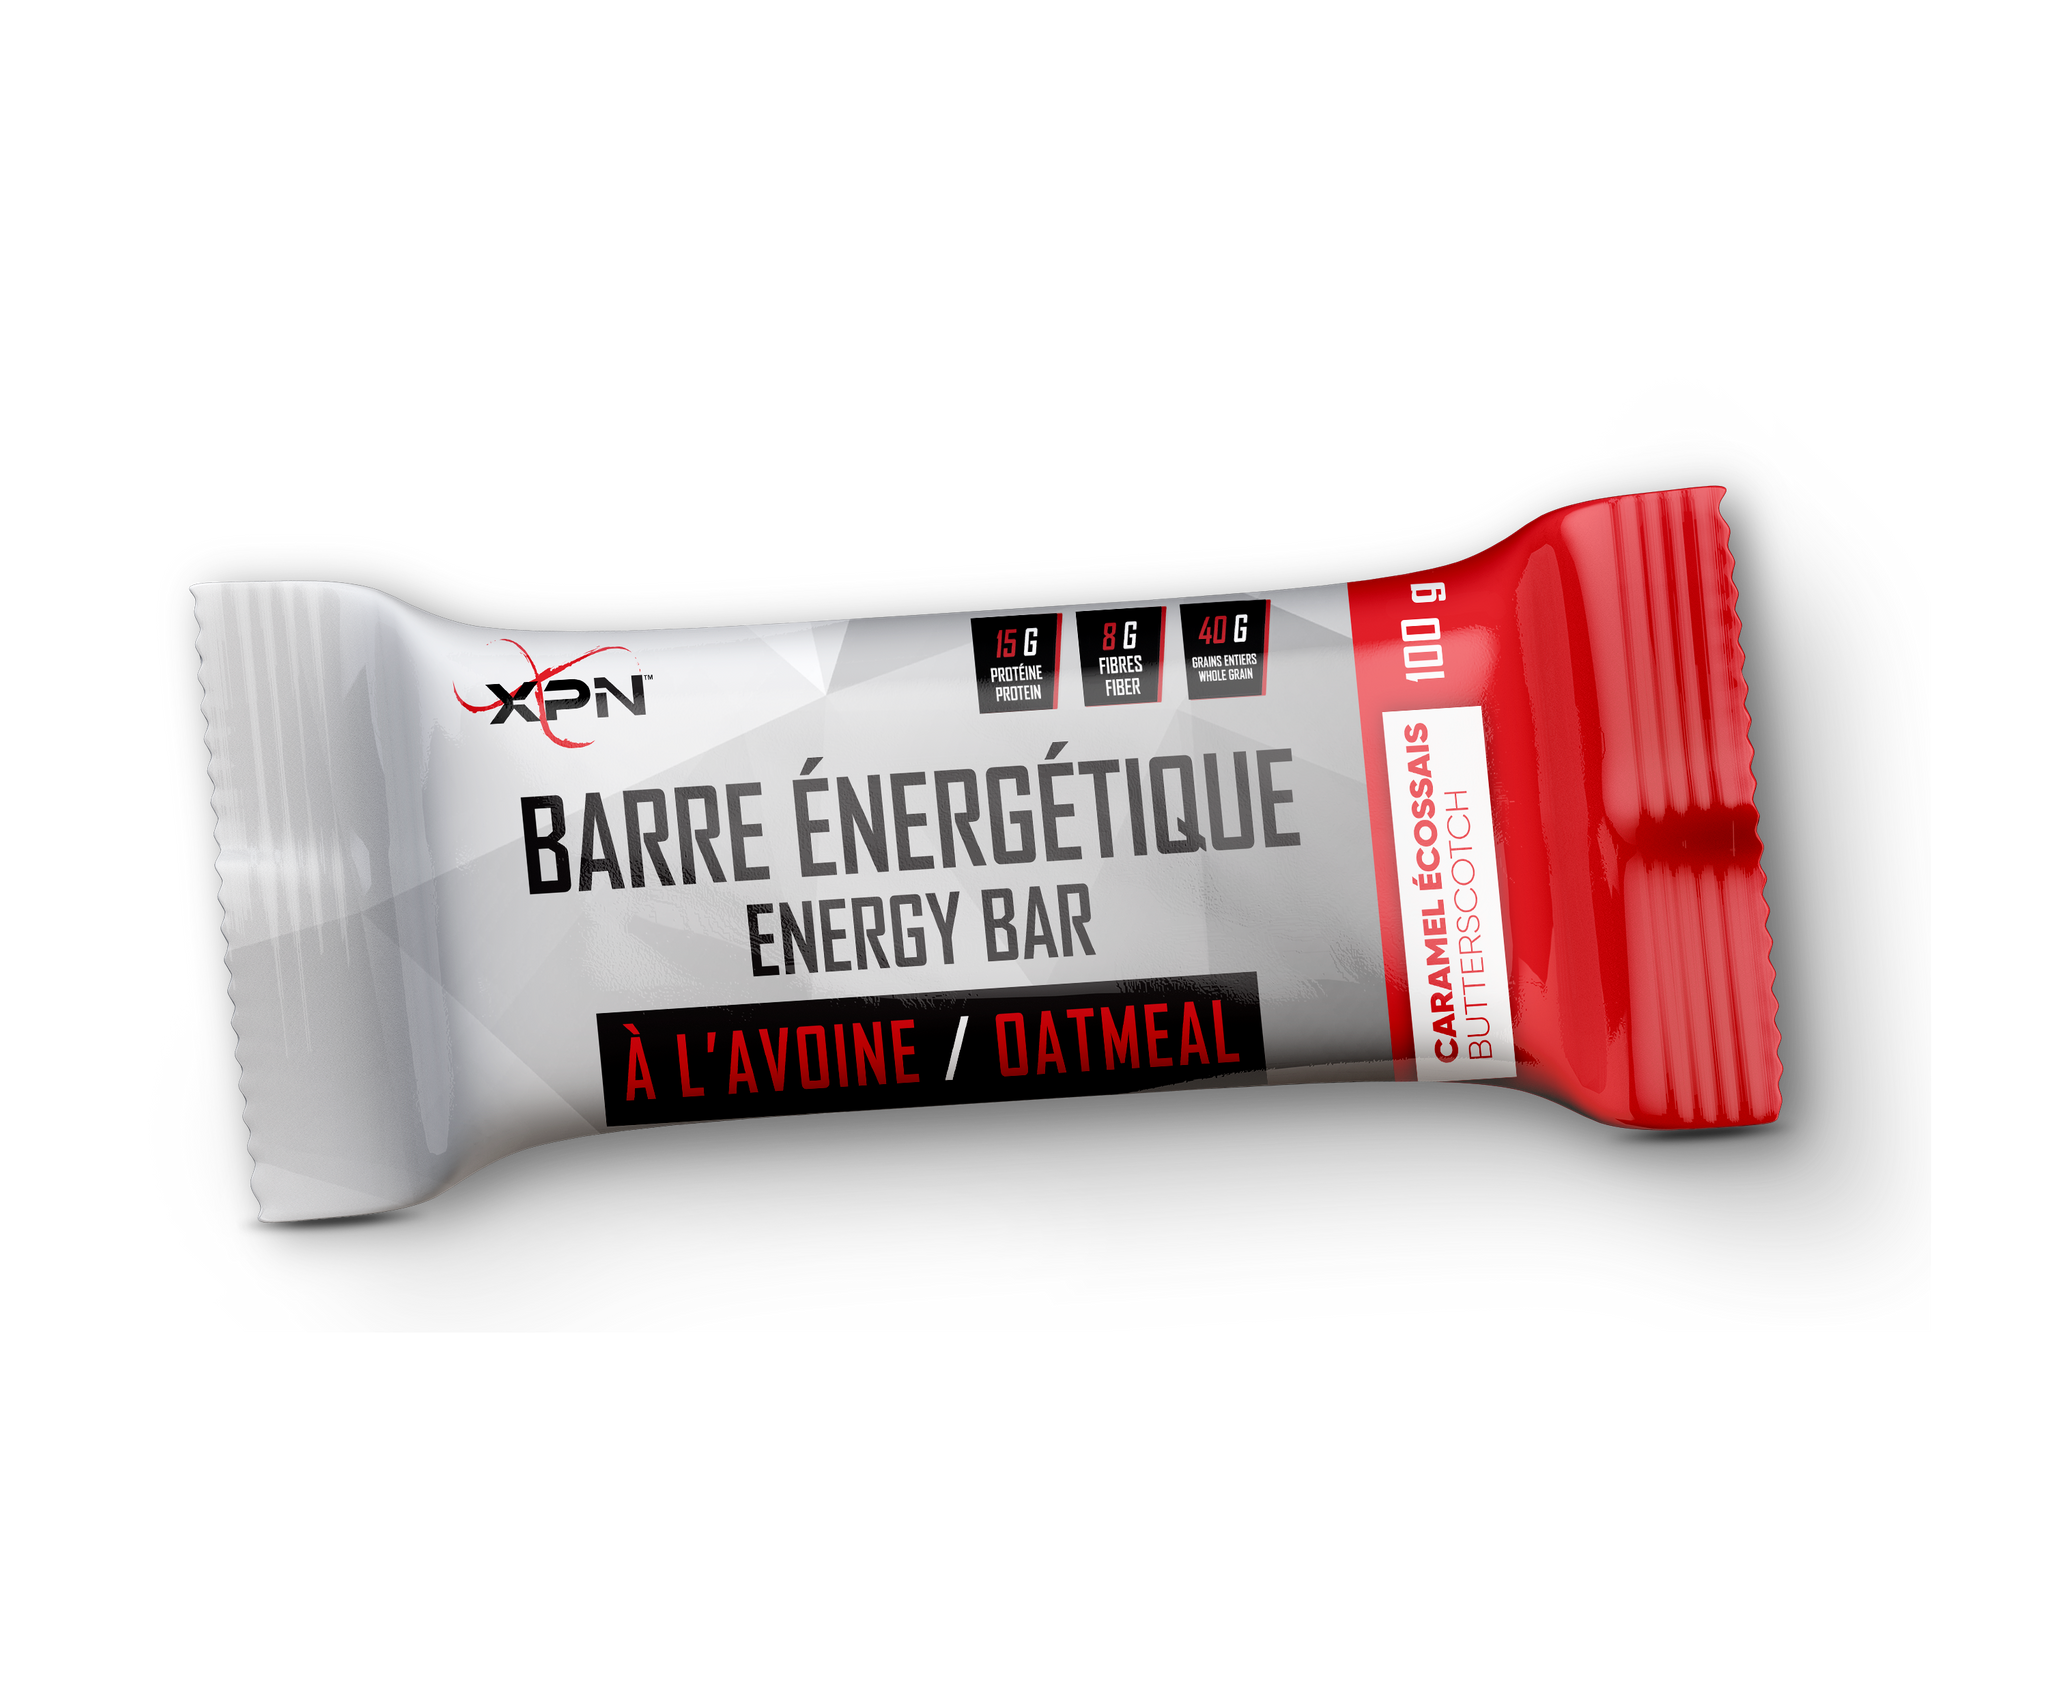 Energy Bar||Barre Énergétique - XPN World